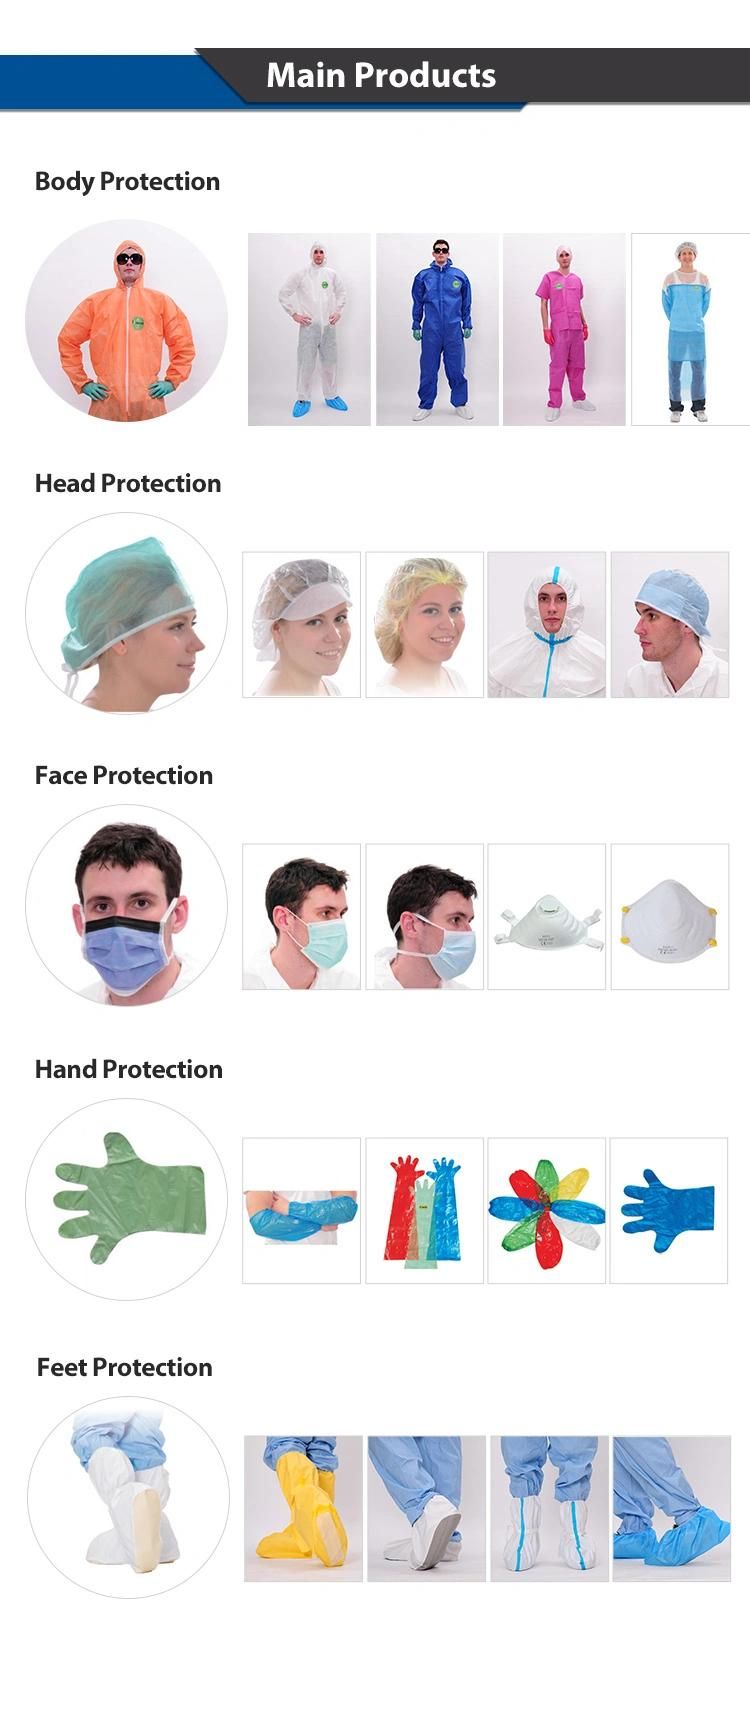 Hot Sale Industry En14683 Bfe99 Earloop Elastic Protective PP 3 Ply Face Mask